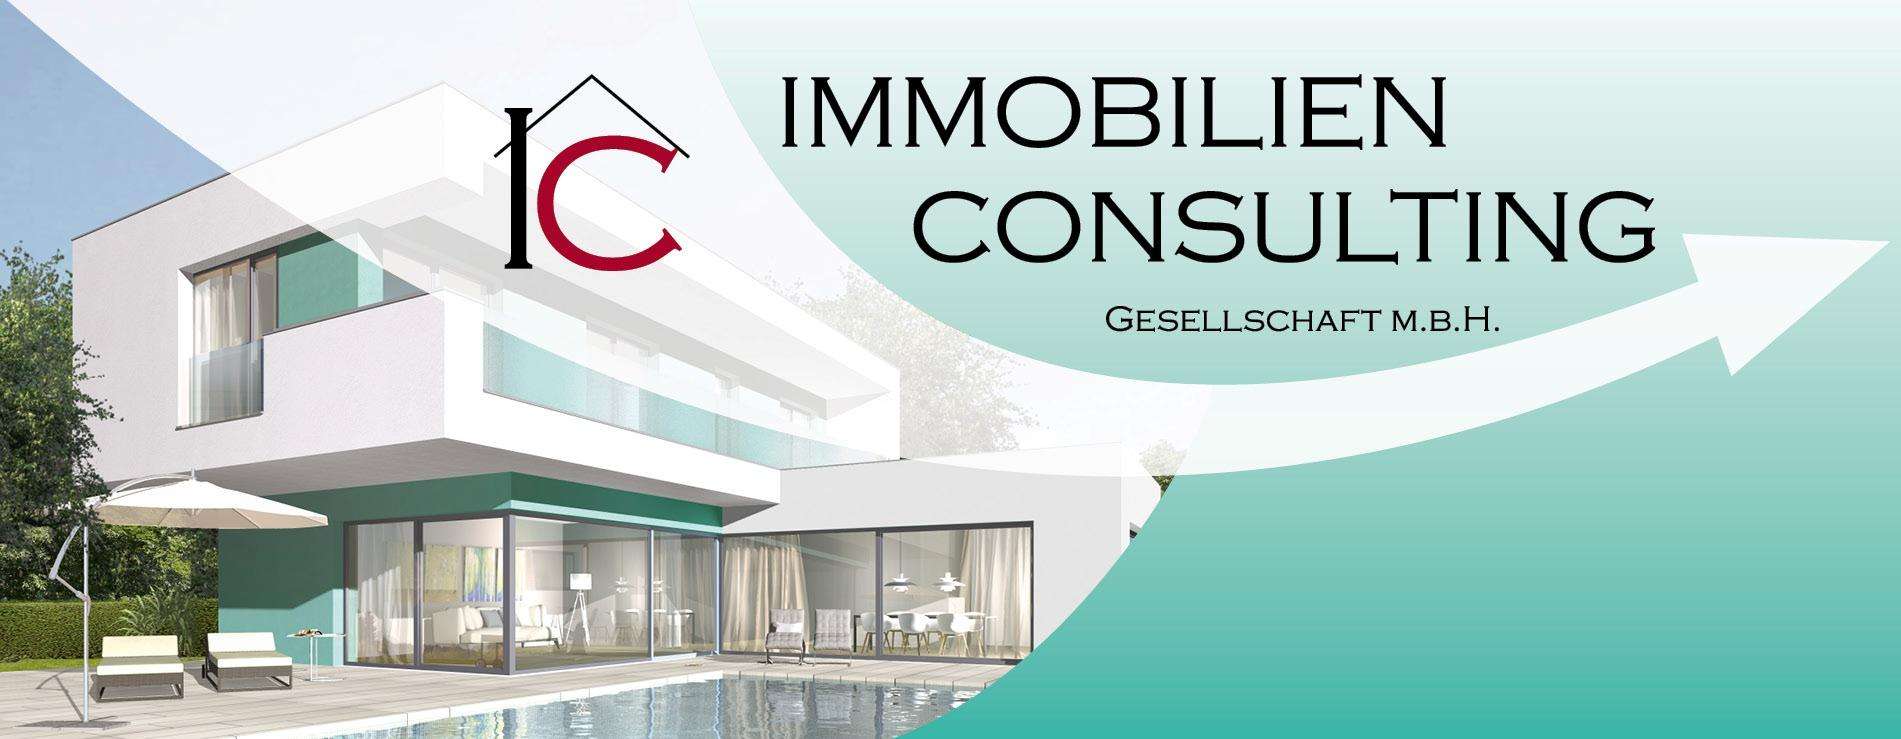 Makler Immobilien Consulting GmbH logo